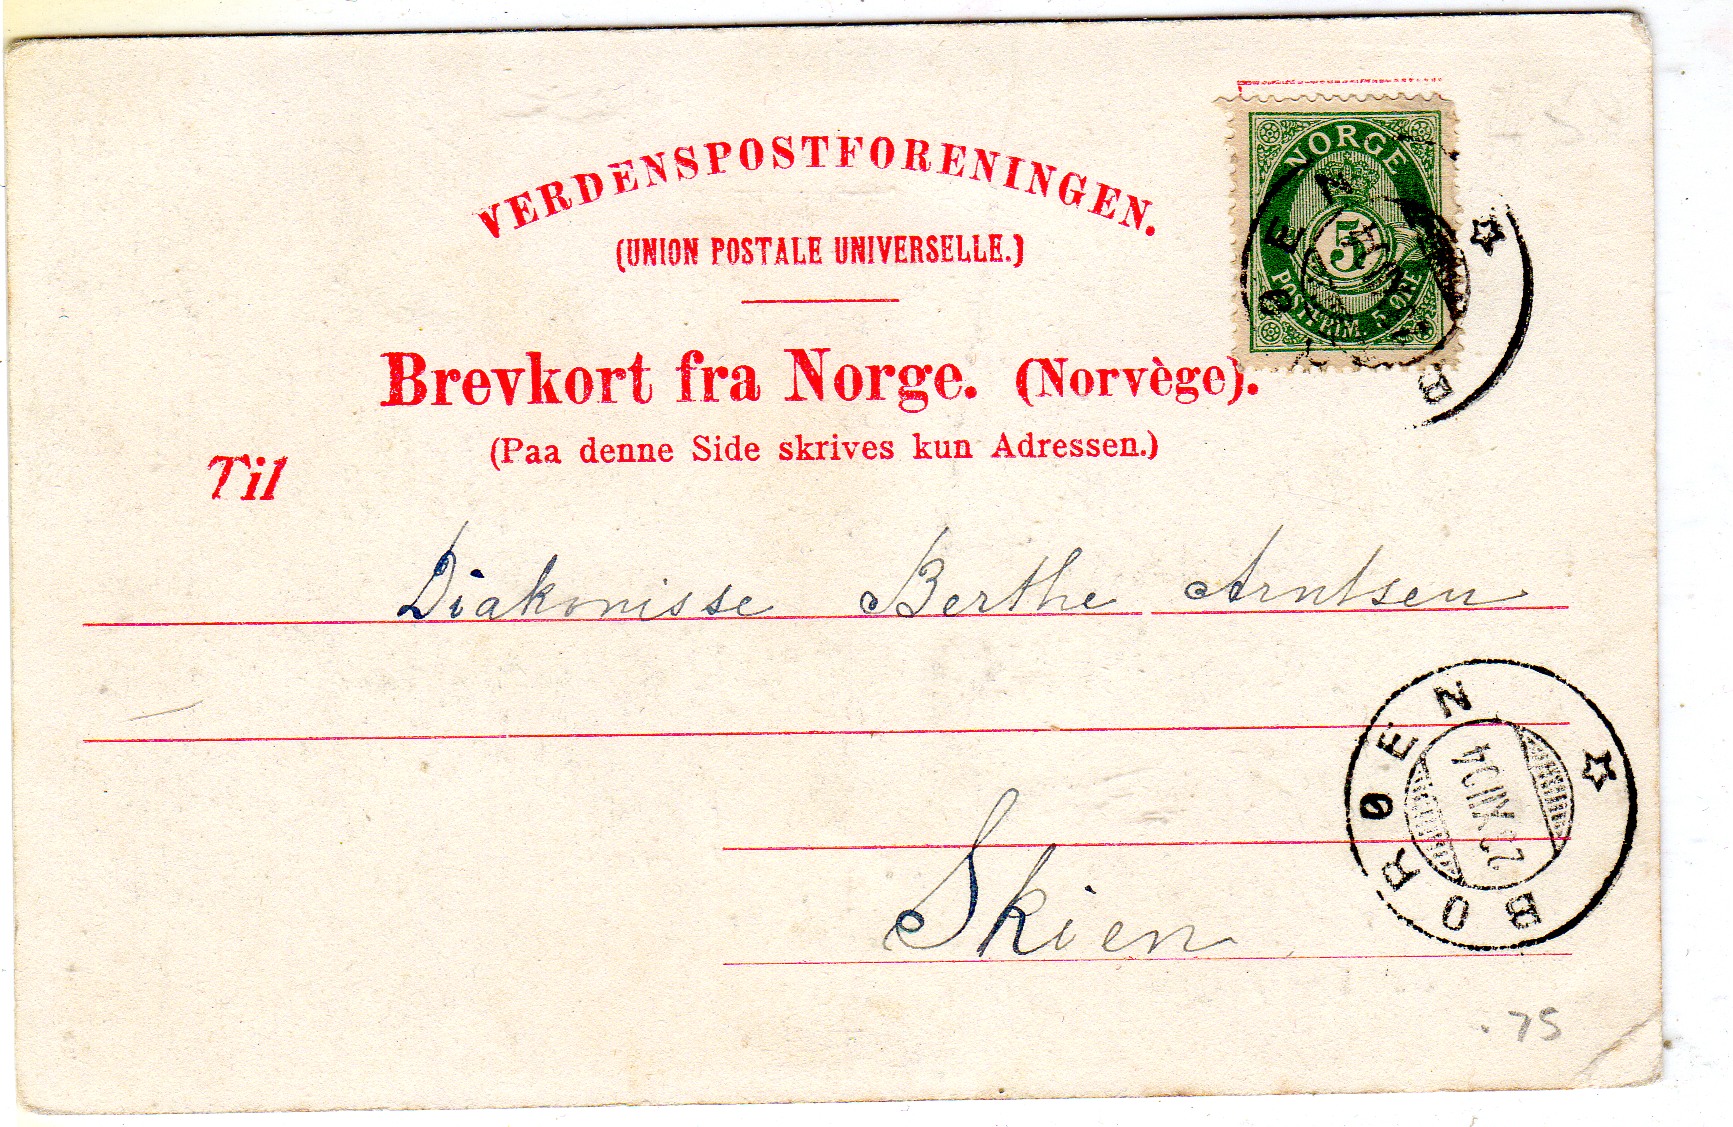 Tromsø Ulfsfjord st Borøen 1904 grad3